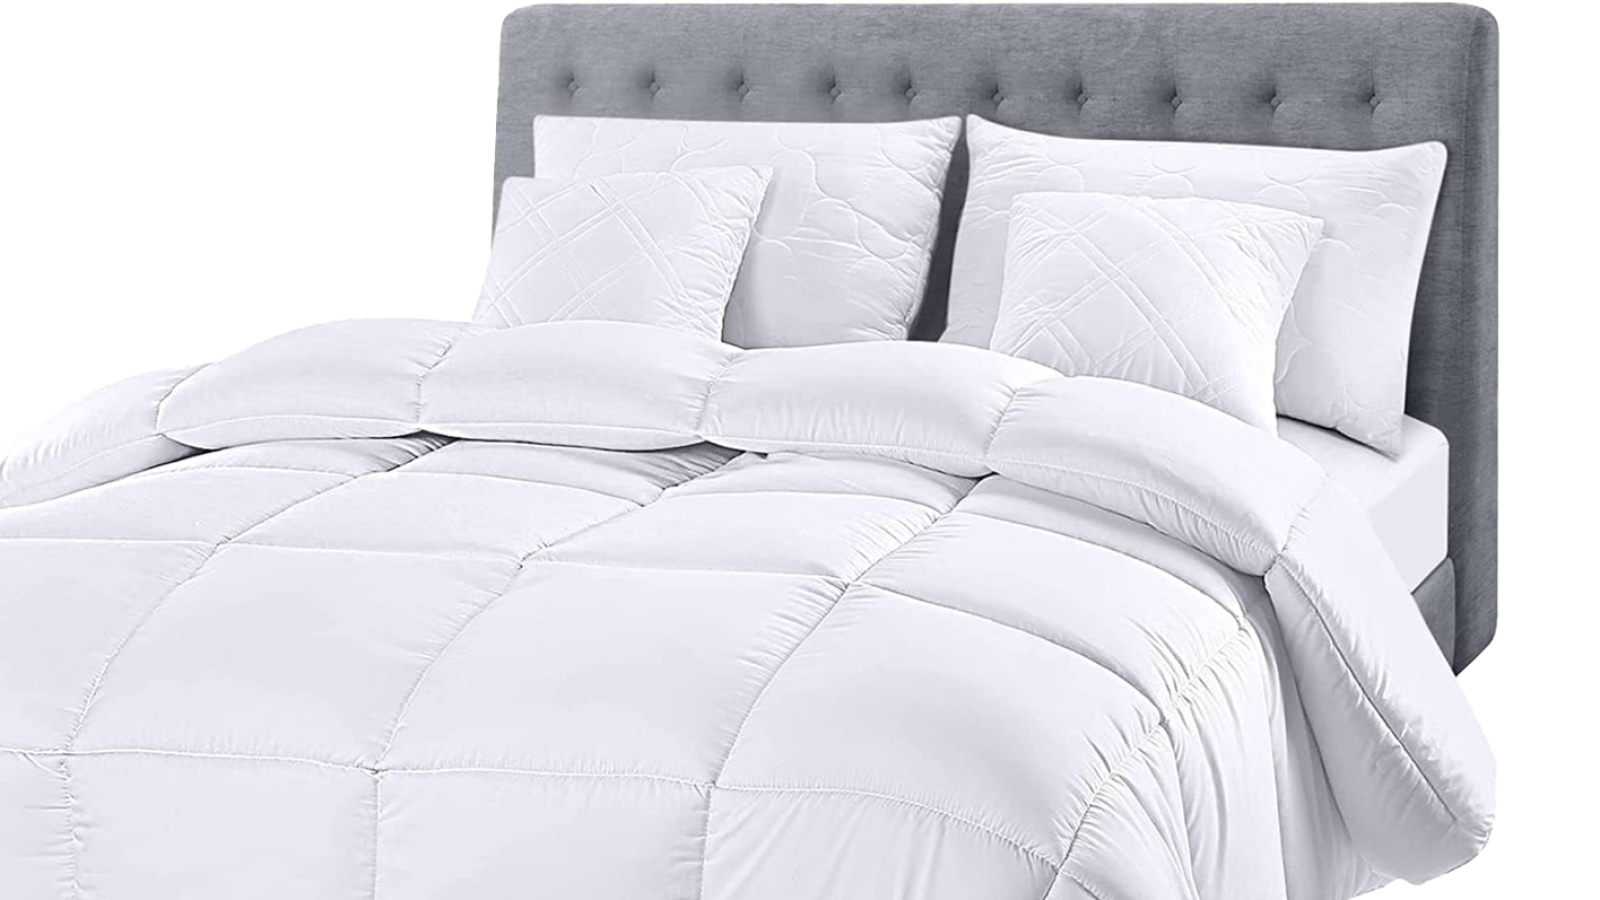 Utopia Bedding Comforter